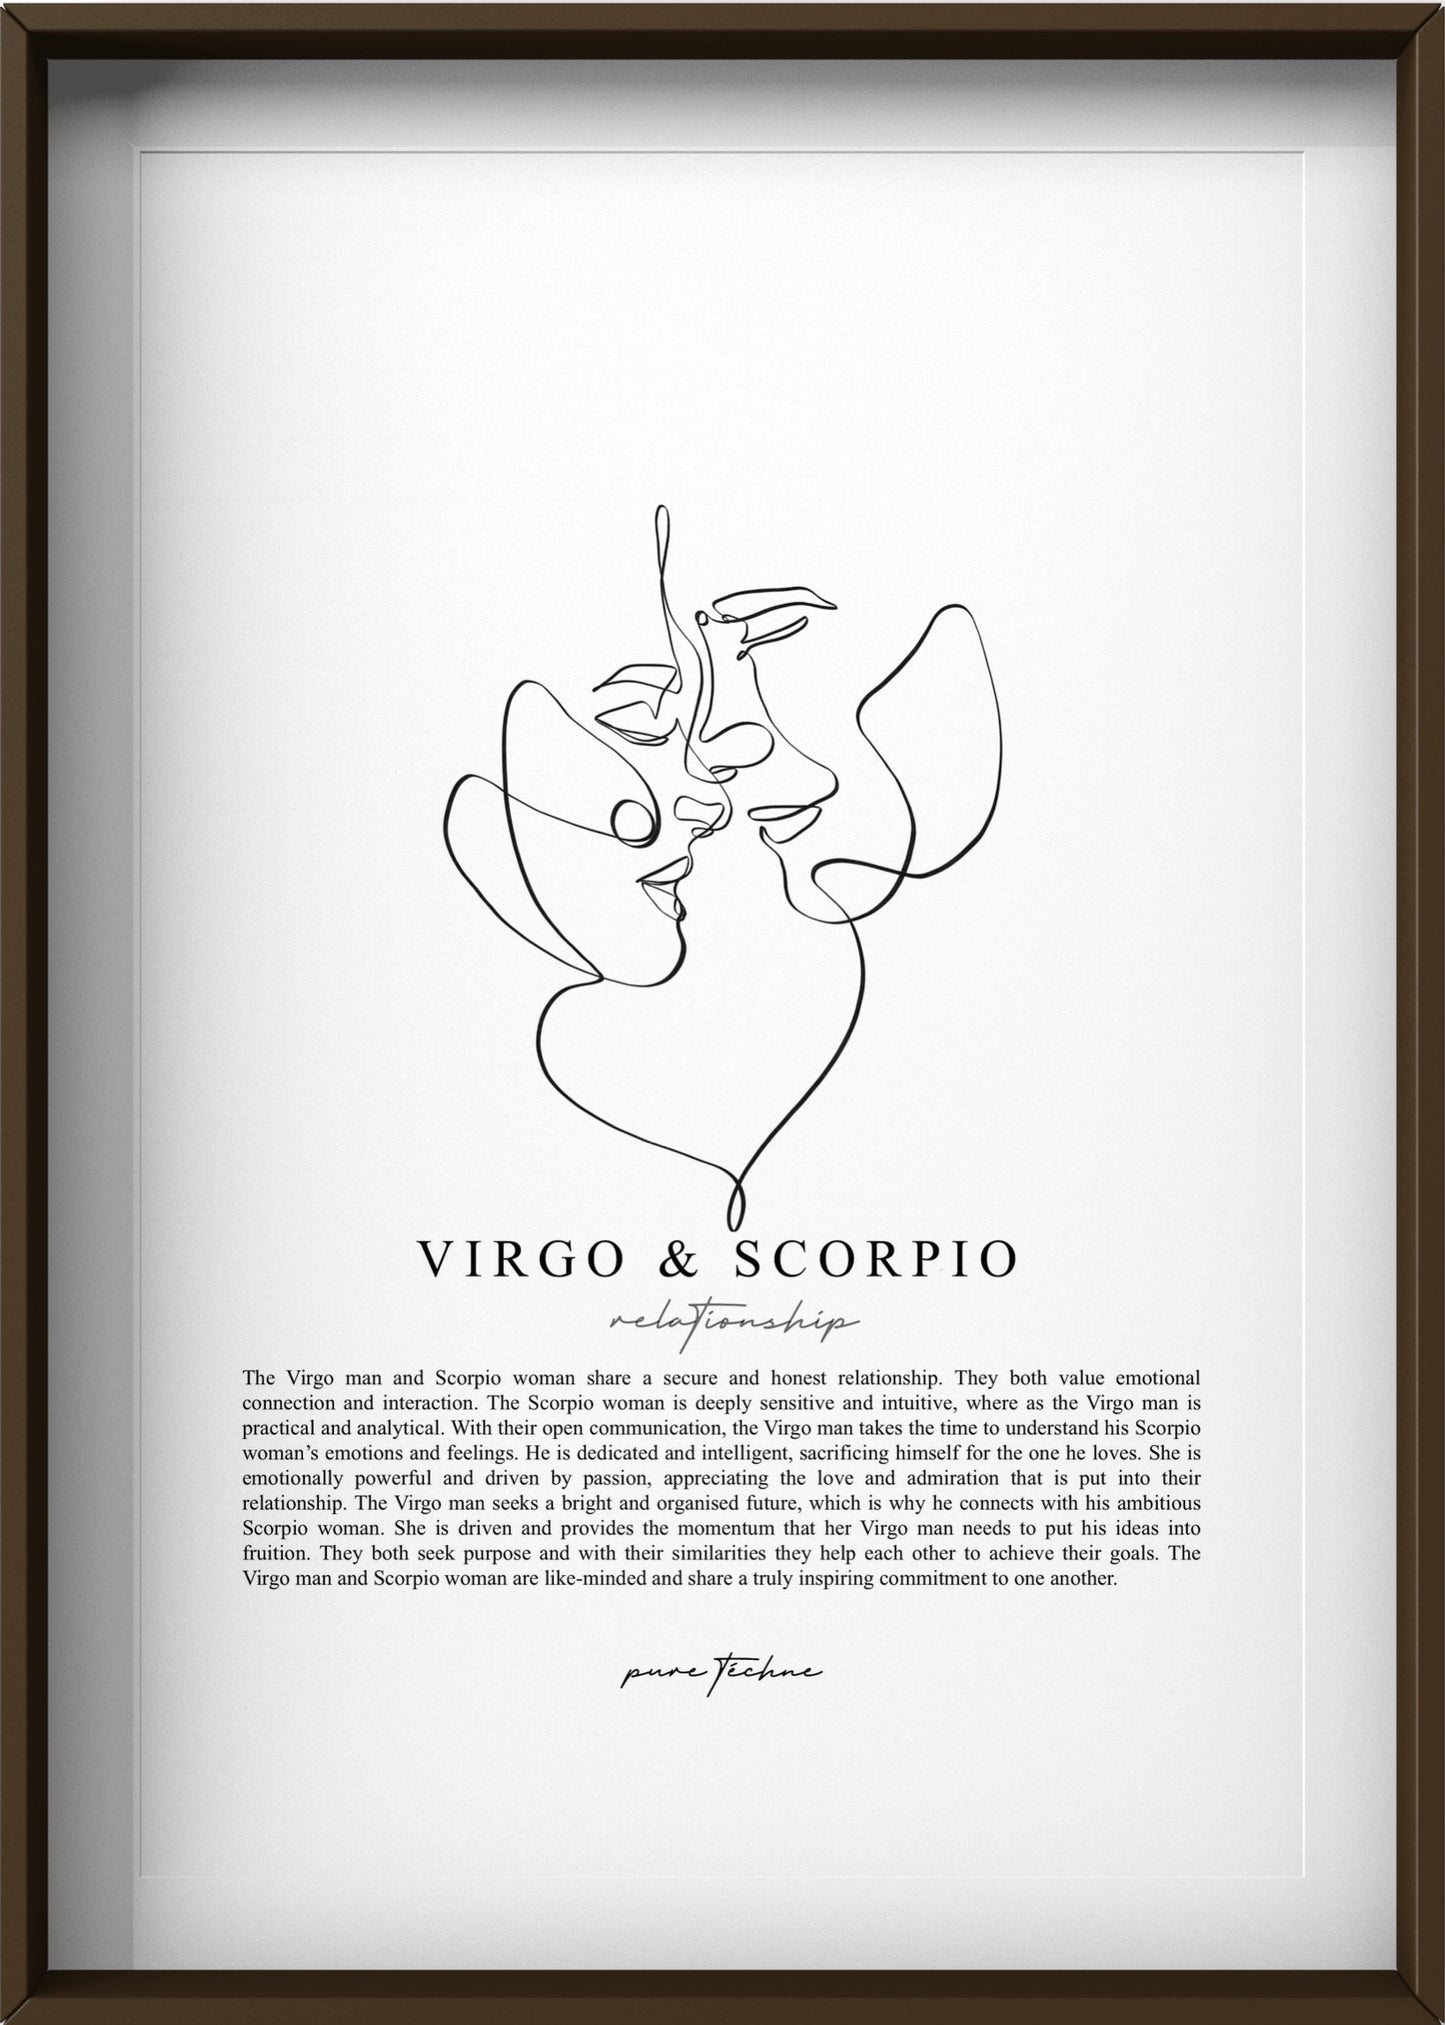 Virgo Man & Scorpio Woman